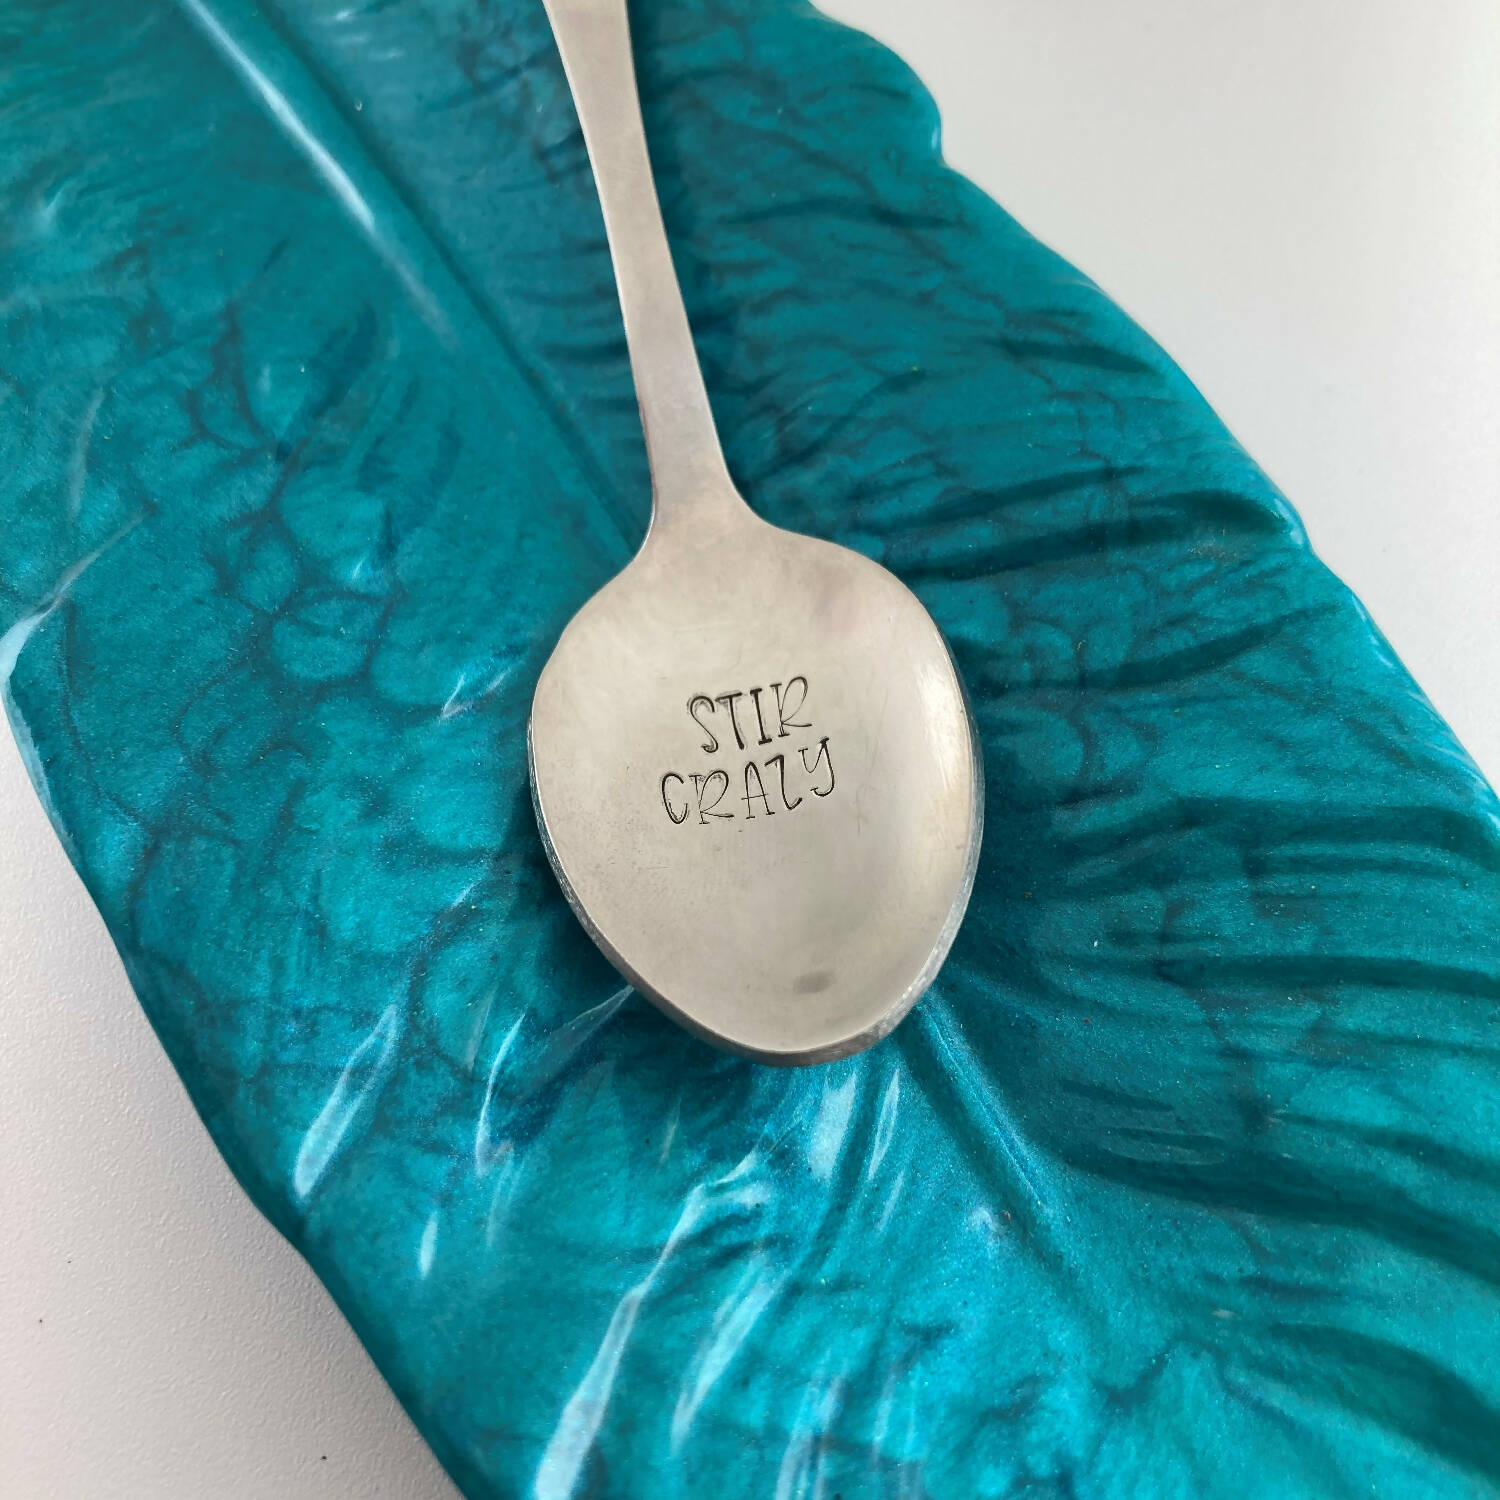 Cutlery - stir crazy teaspoon